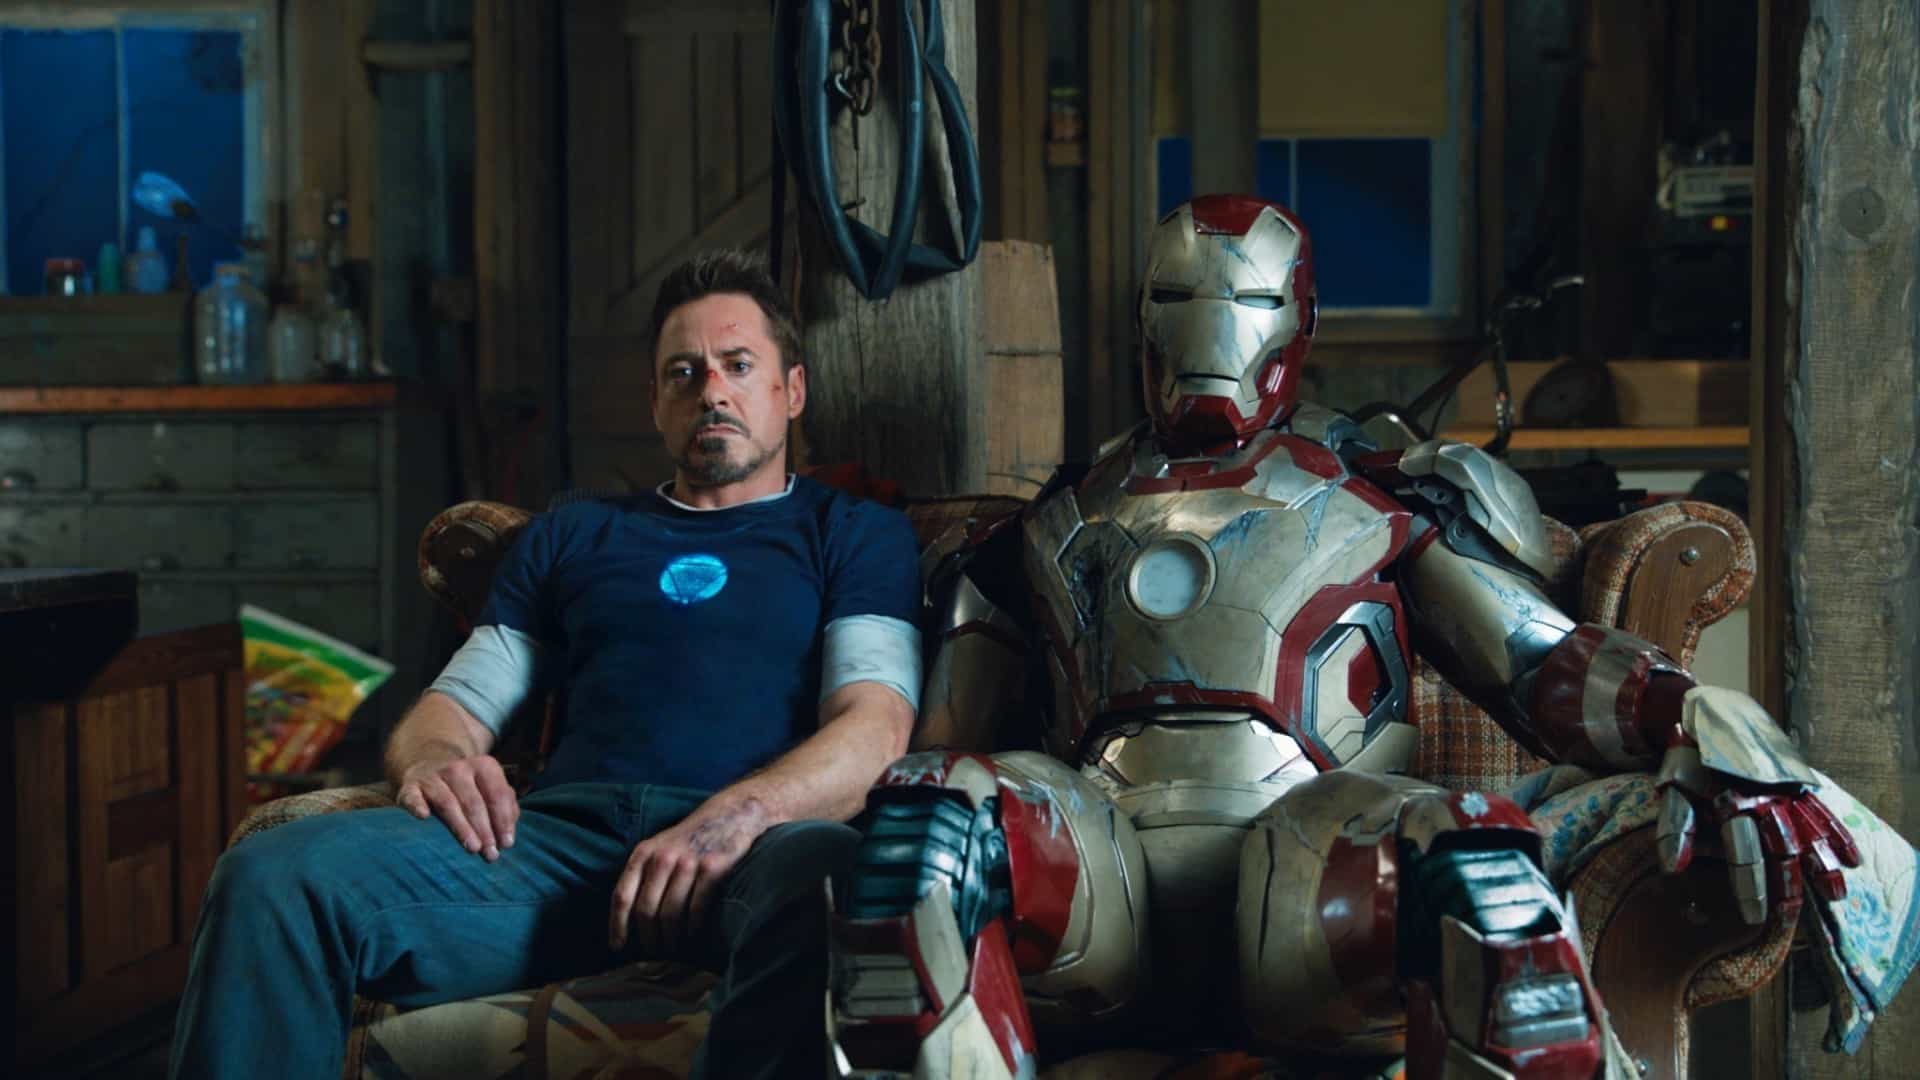 Tony Stark with Iron Man suit